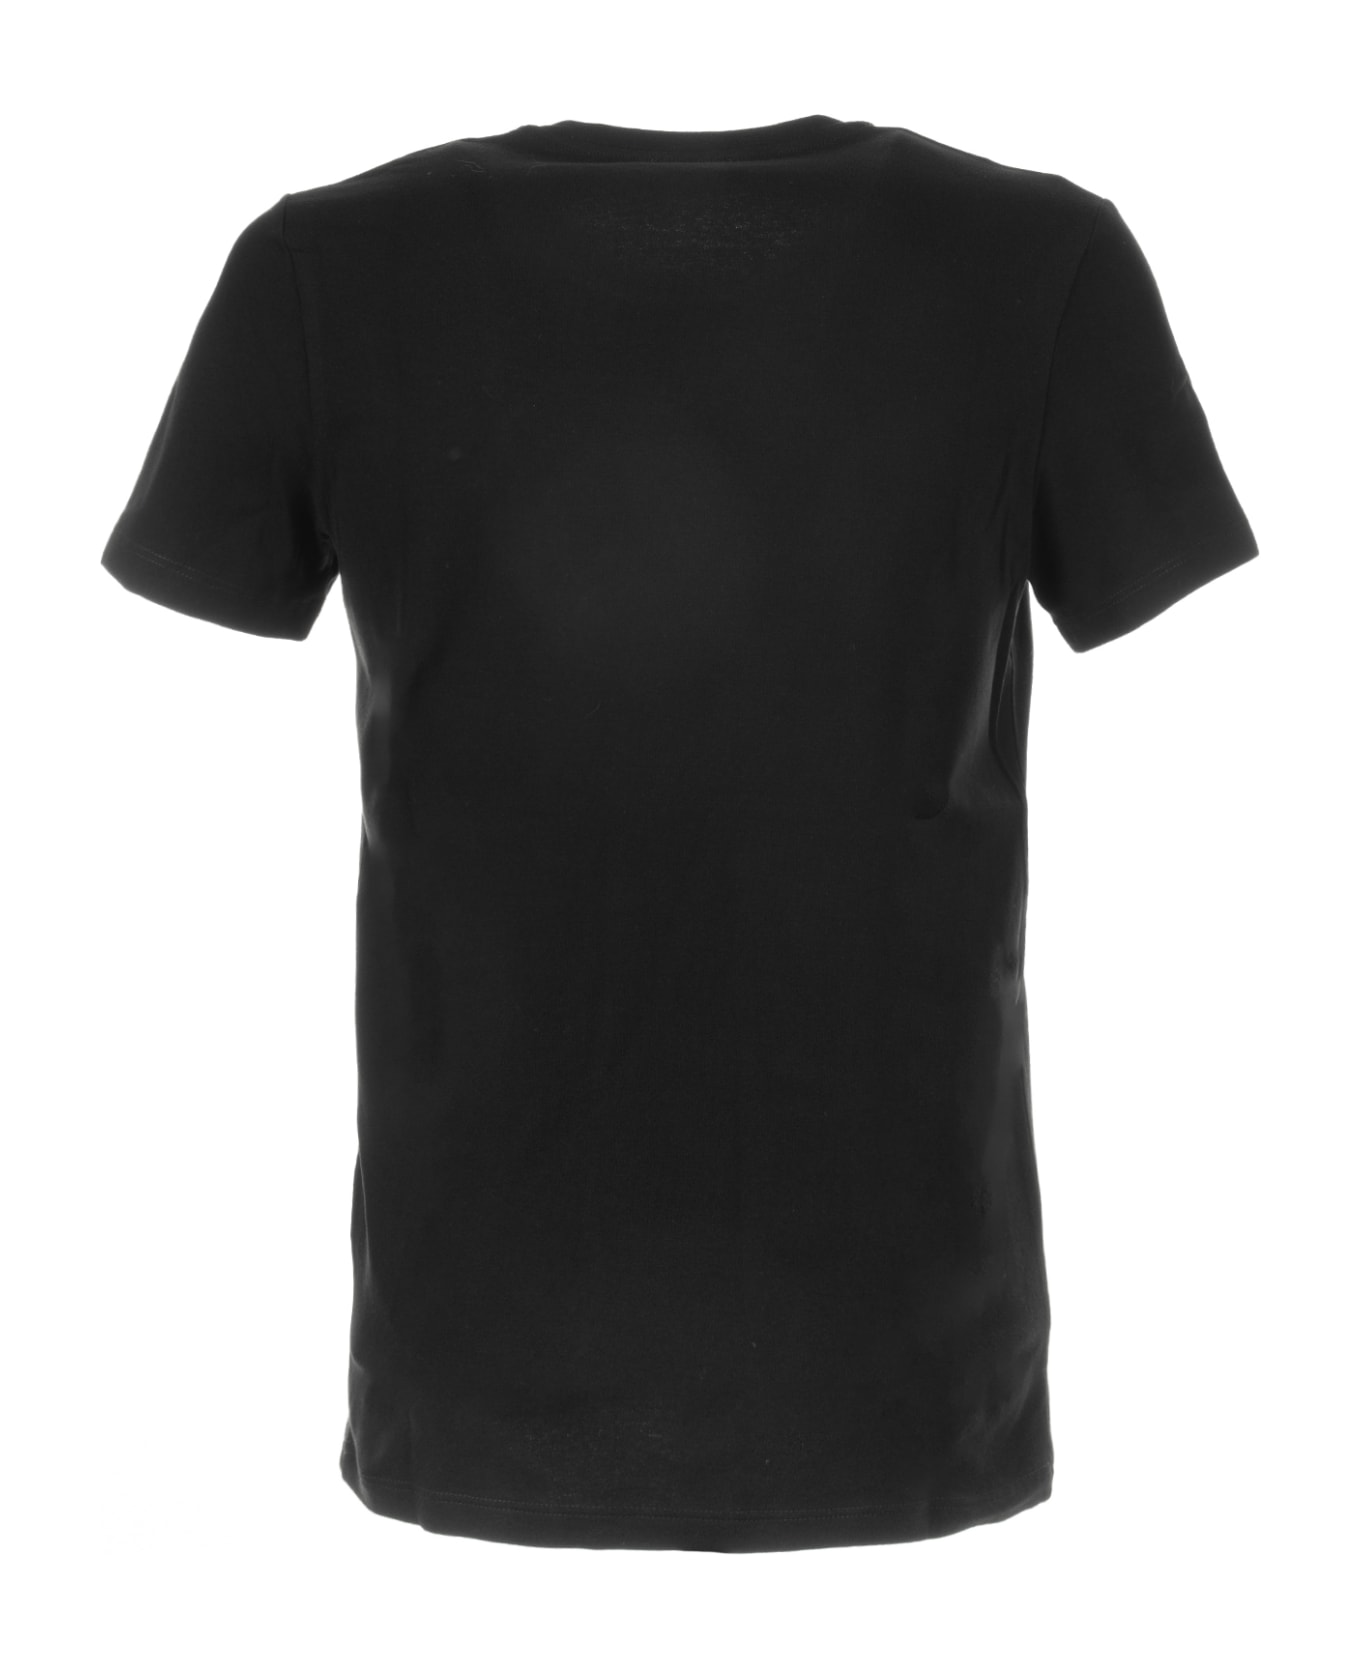 Dondup Black Stretch Jersey T-shirt - Black